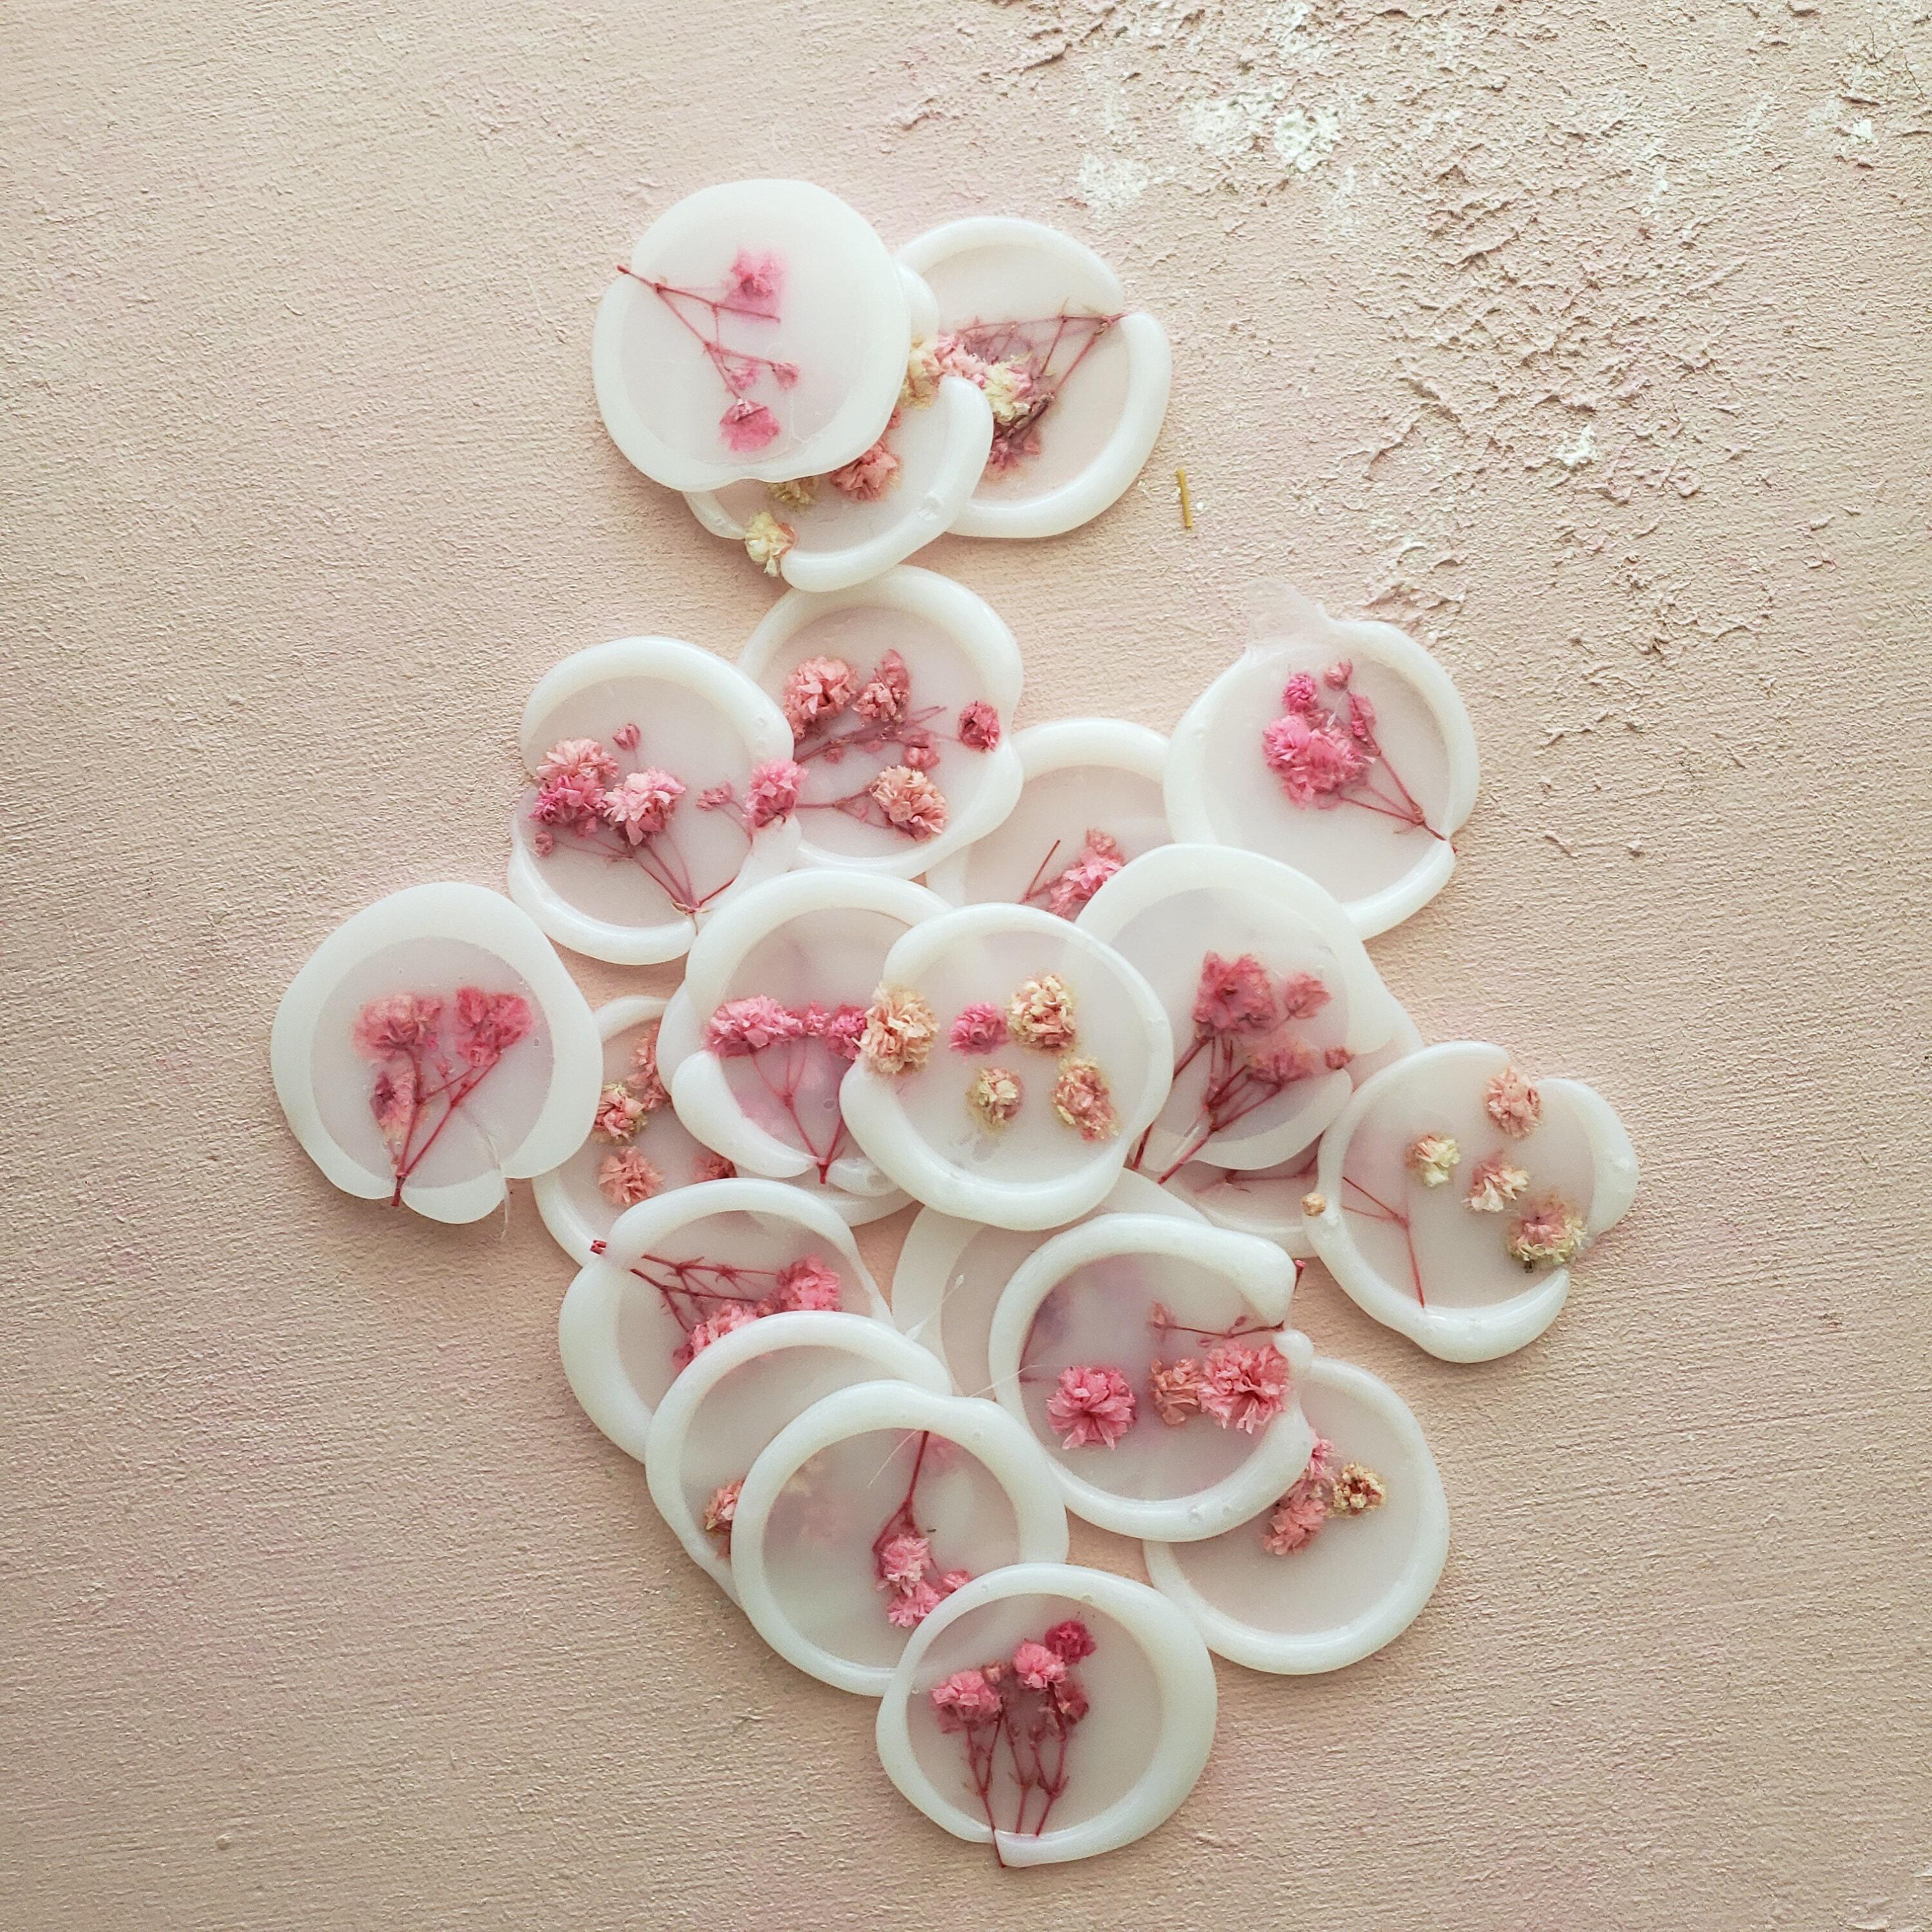  YOKIOU Pink Wax Seal Kit for Wedding with 3 Wax Seal